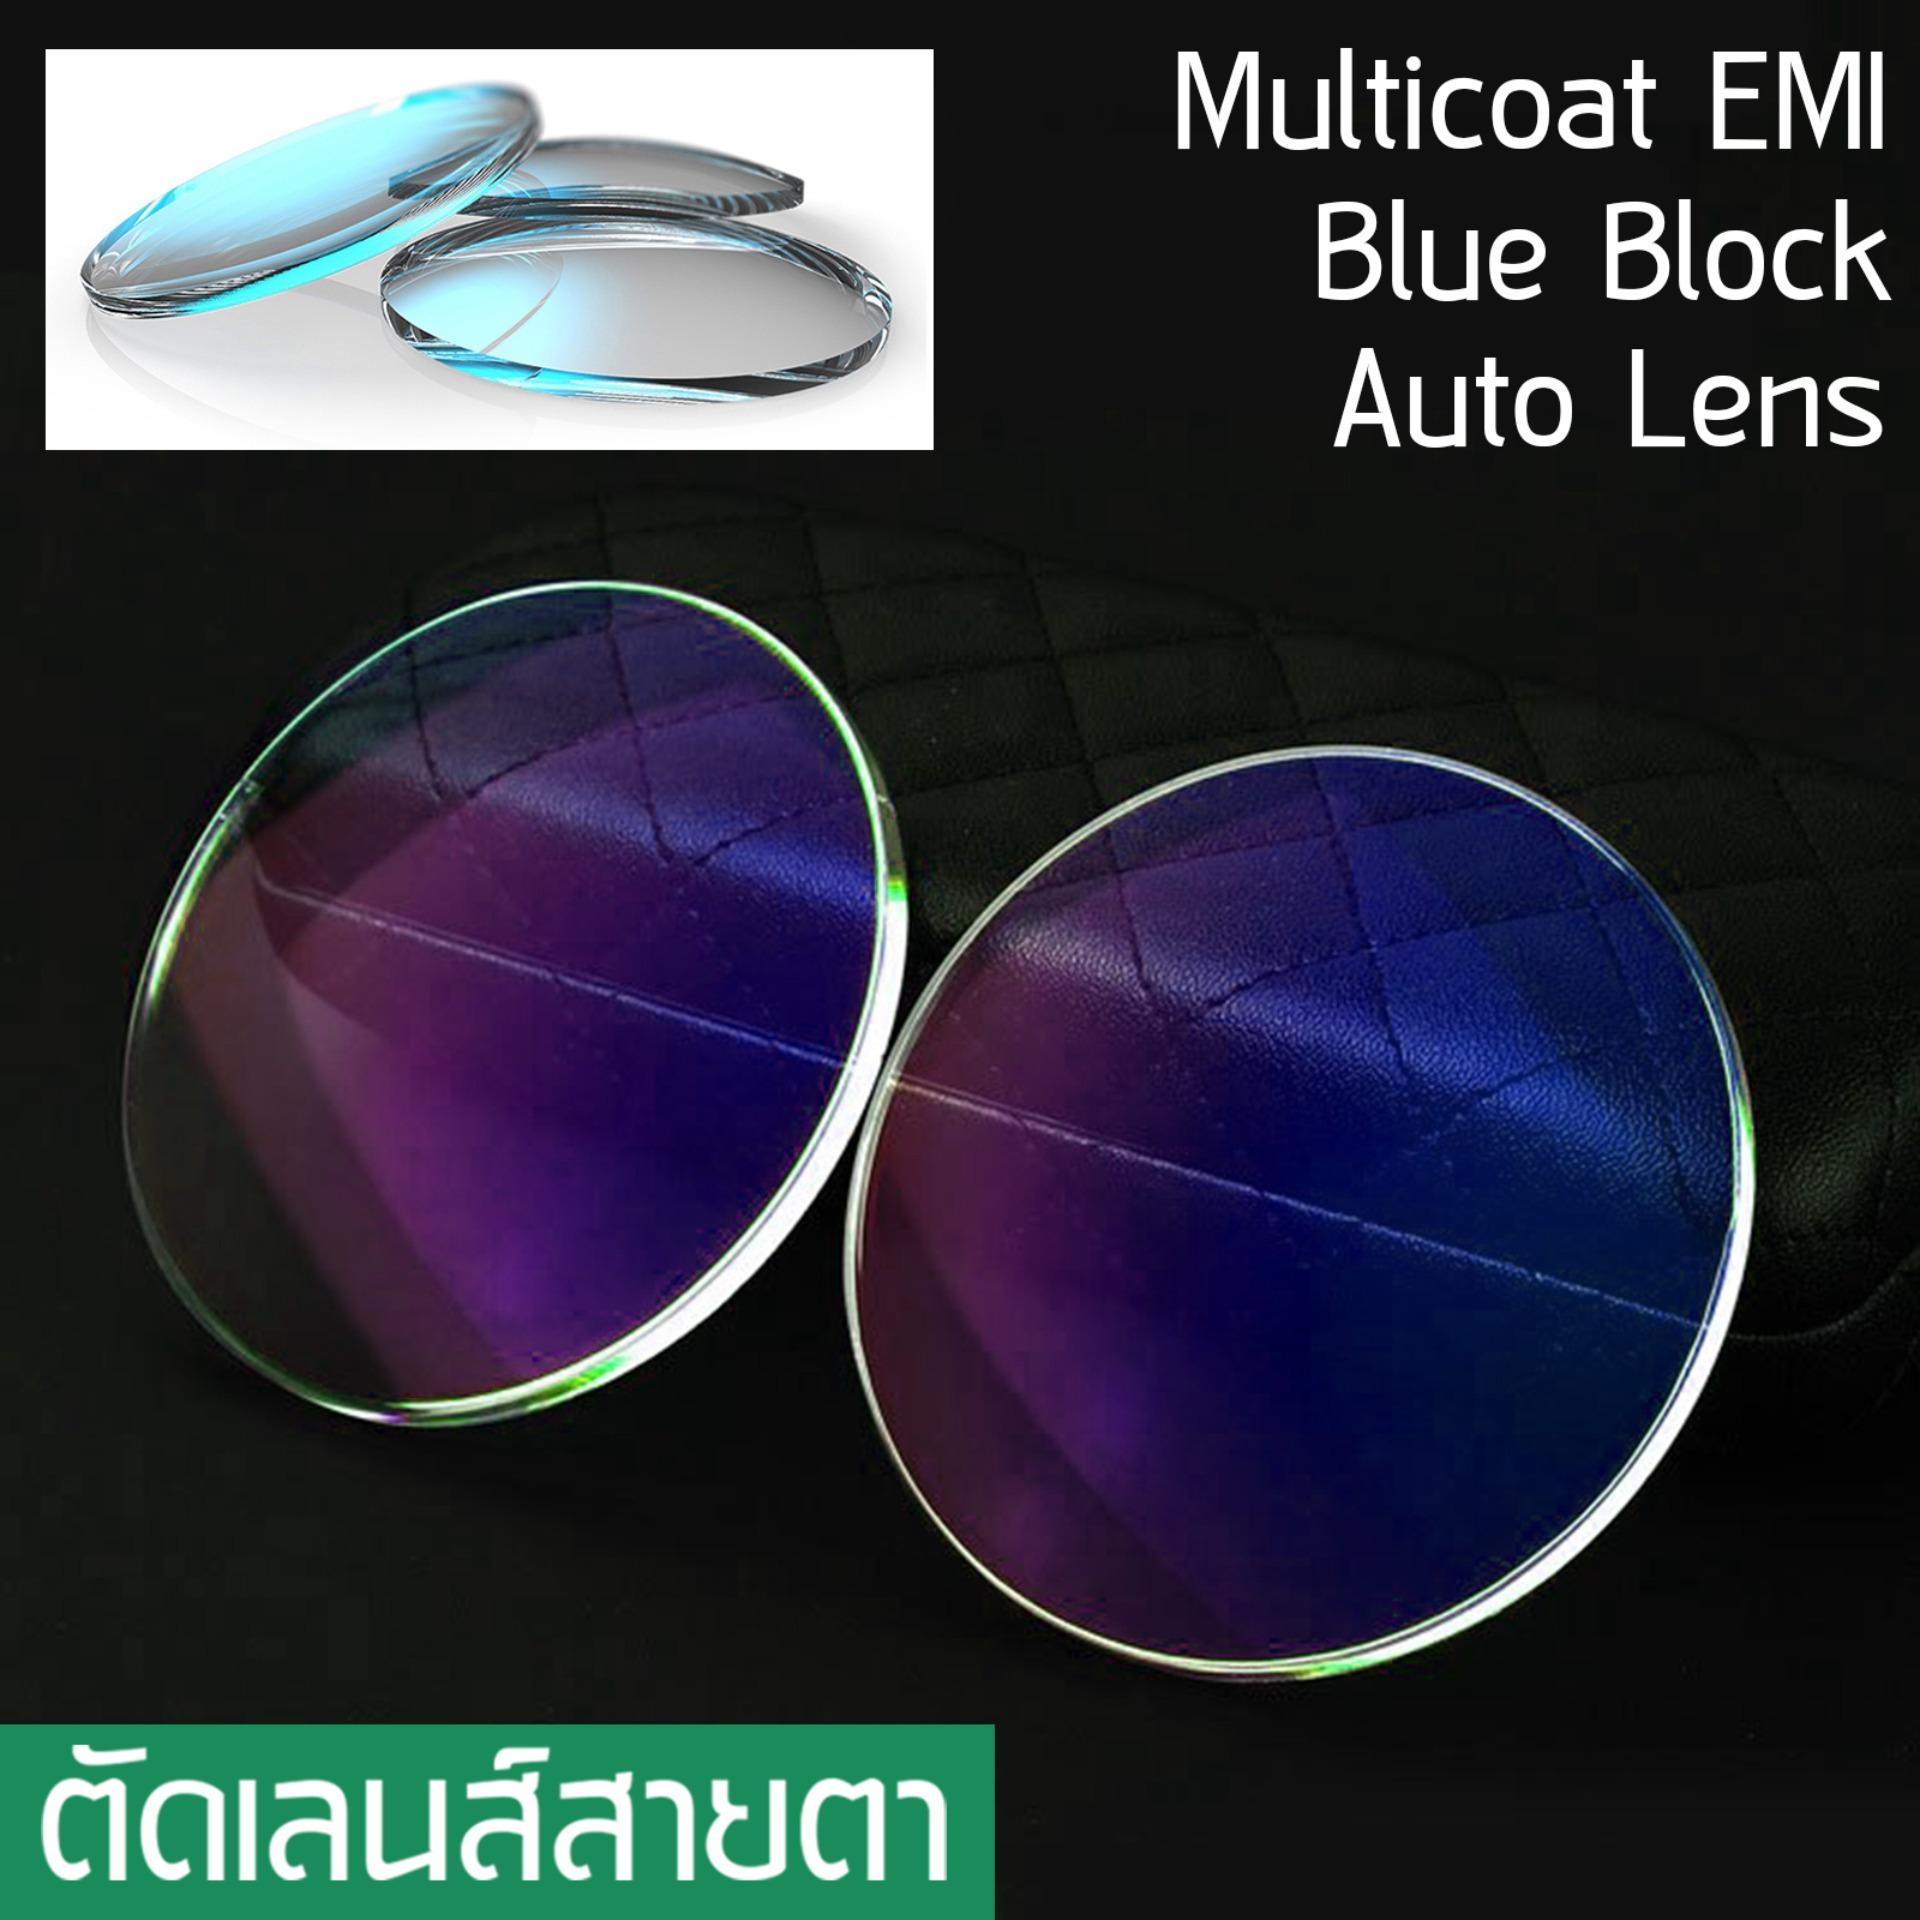 Focus Lens เลนส์โฟกัส สั่งตัดเลนส์สายตา ทุกชนิด เลนส์กรองแสง BlueBlock บลูบล็อค / เลนส์ปรับแสง Auto เปลี่ยนสี / เลนส์มัลติโค๊ต Multicoat / Computer กรองแสงคอม มือถือ ป้องกันแสงสีฟ้า / UV 400 สายตาสั้น สายตายาว สายตาเอียง ราคาเลนส์ไม่รวมกรอบแว่นตา